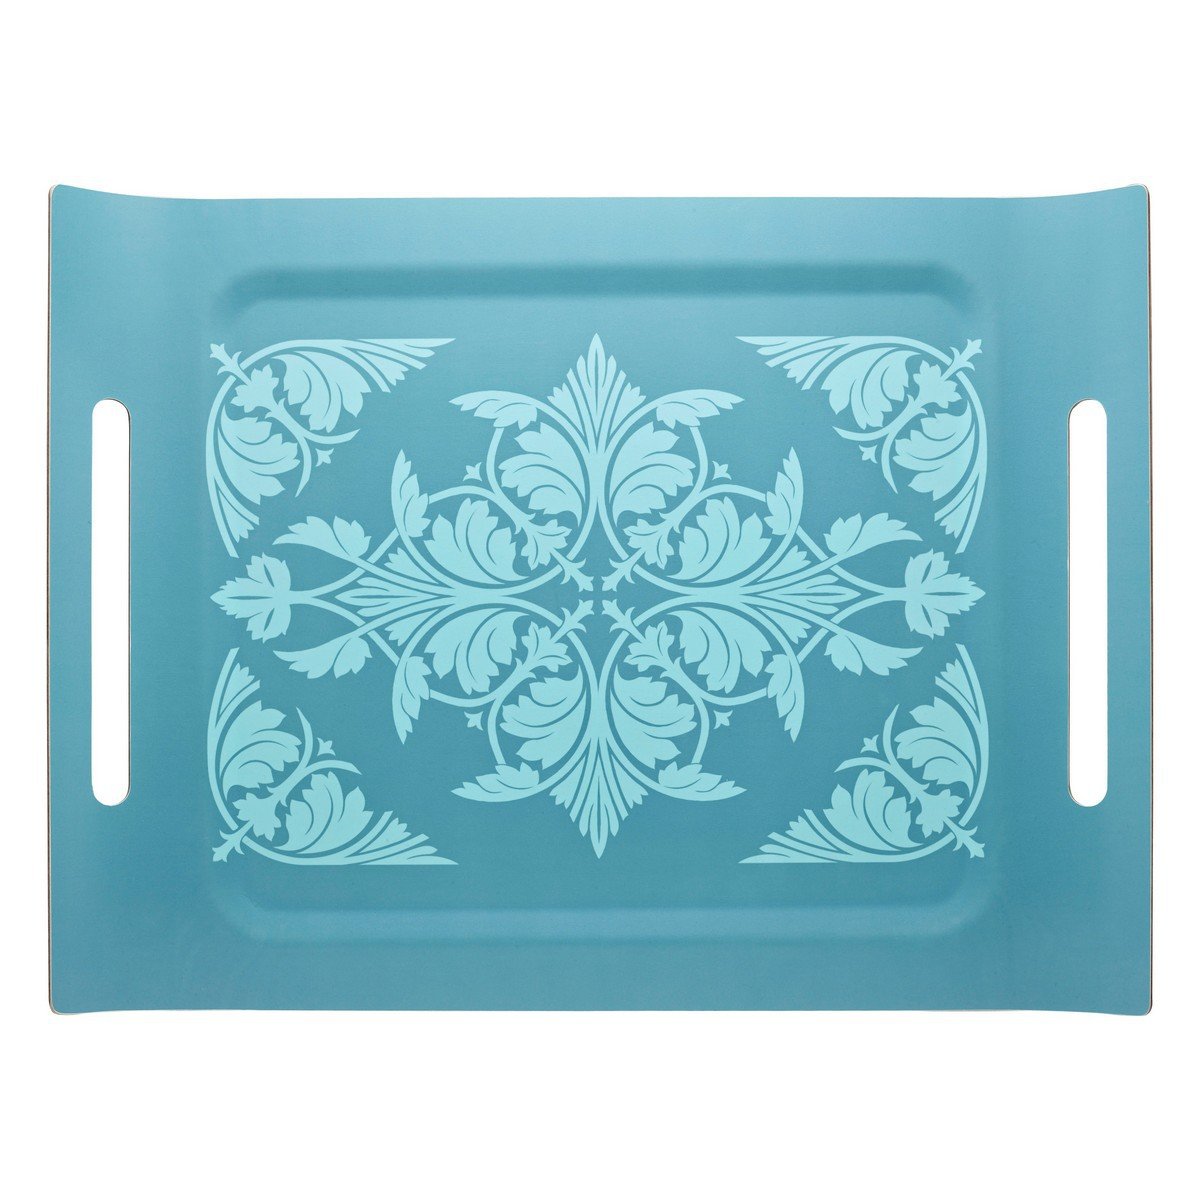 Syracuse Aqua Tray by Le Jacquard Français | Fig Linens - Blue, Wooden, Rectangular serving tray